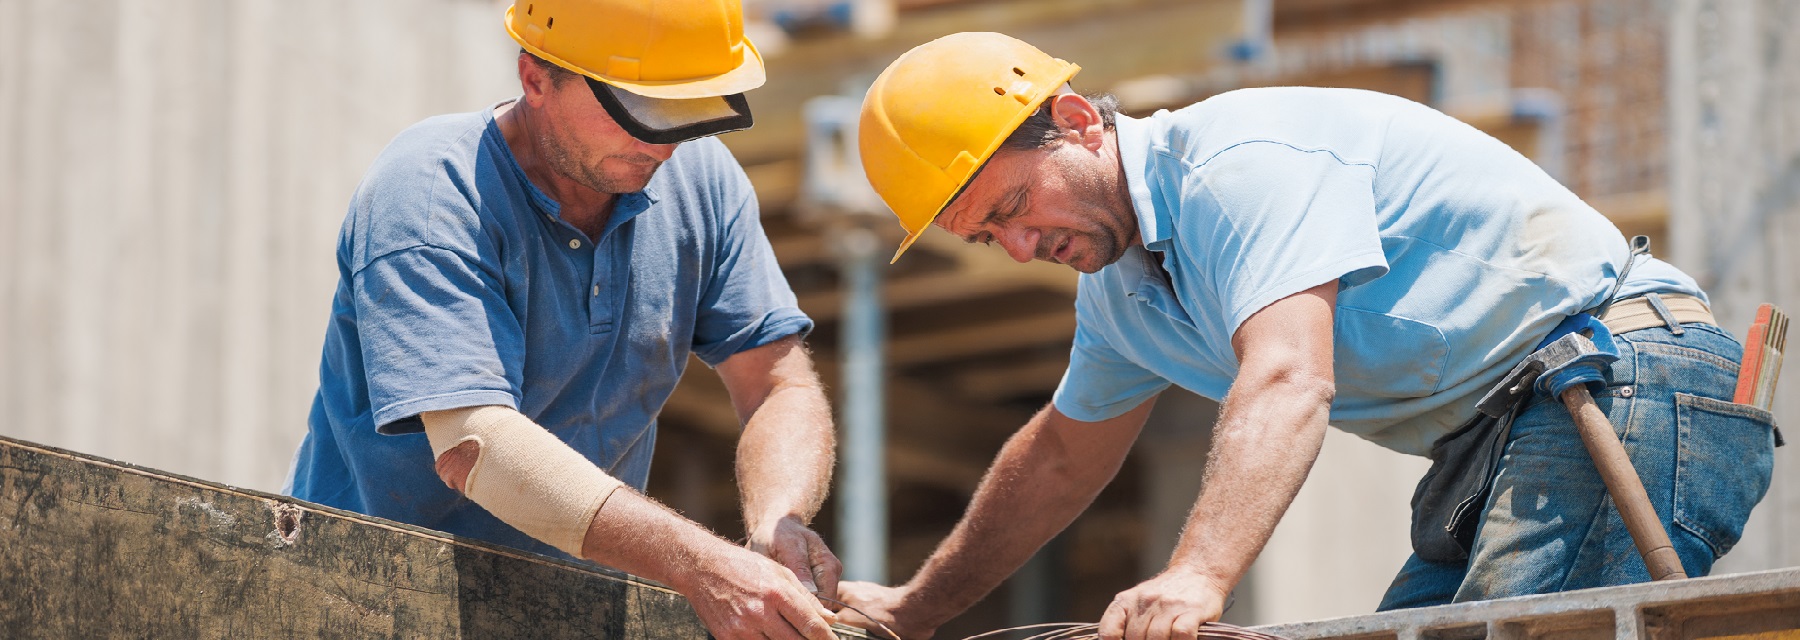 Construction men for business insurance